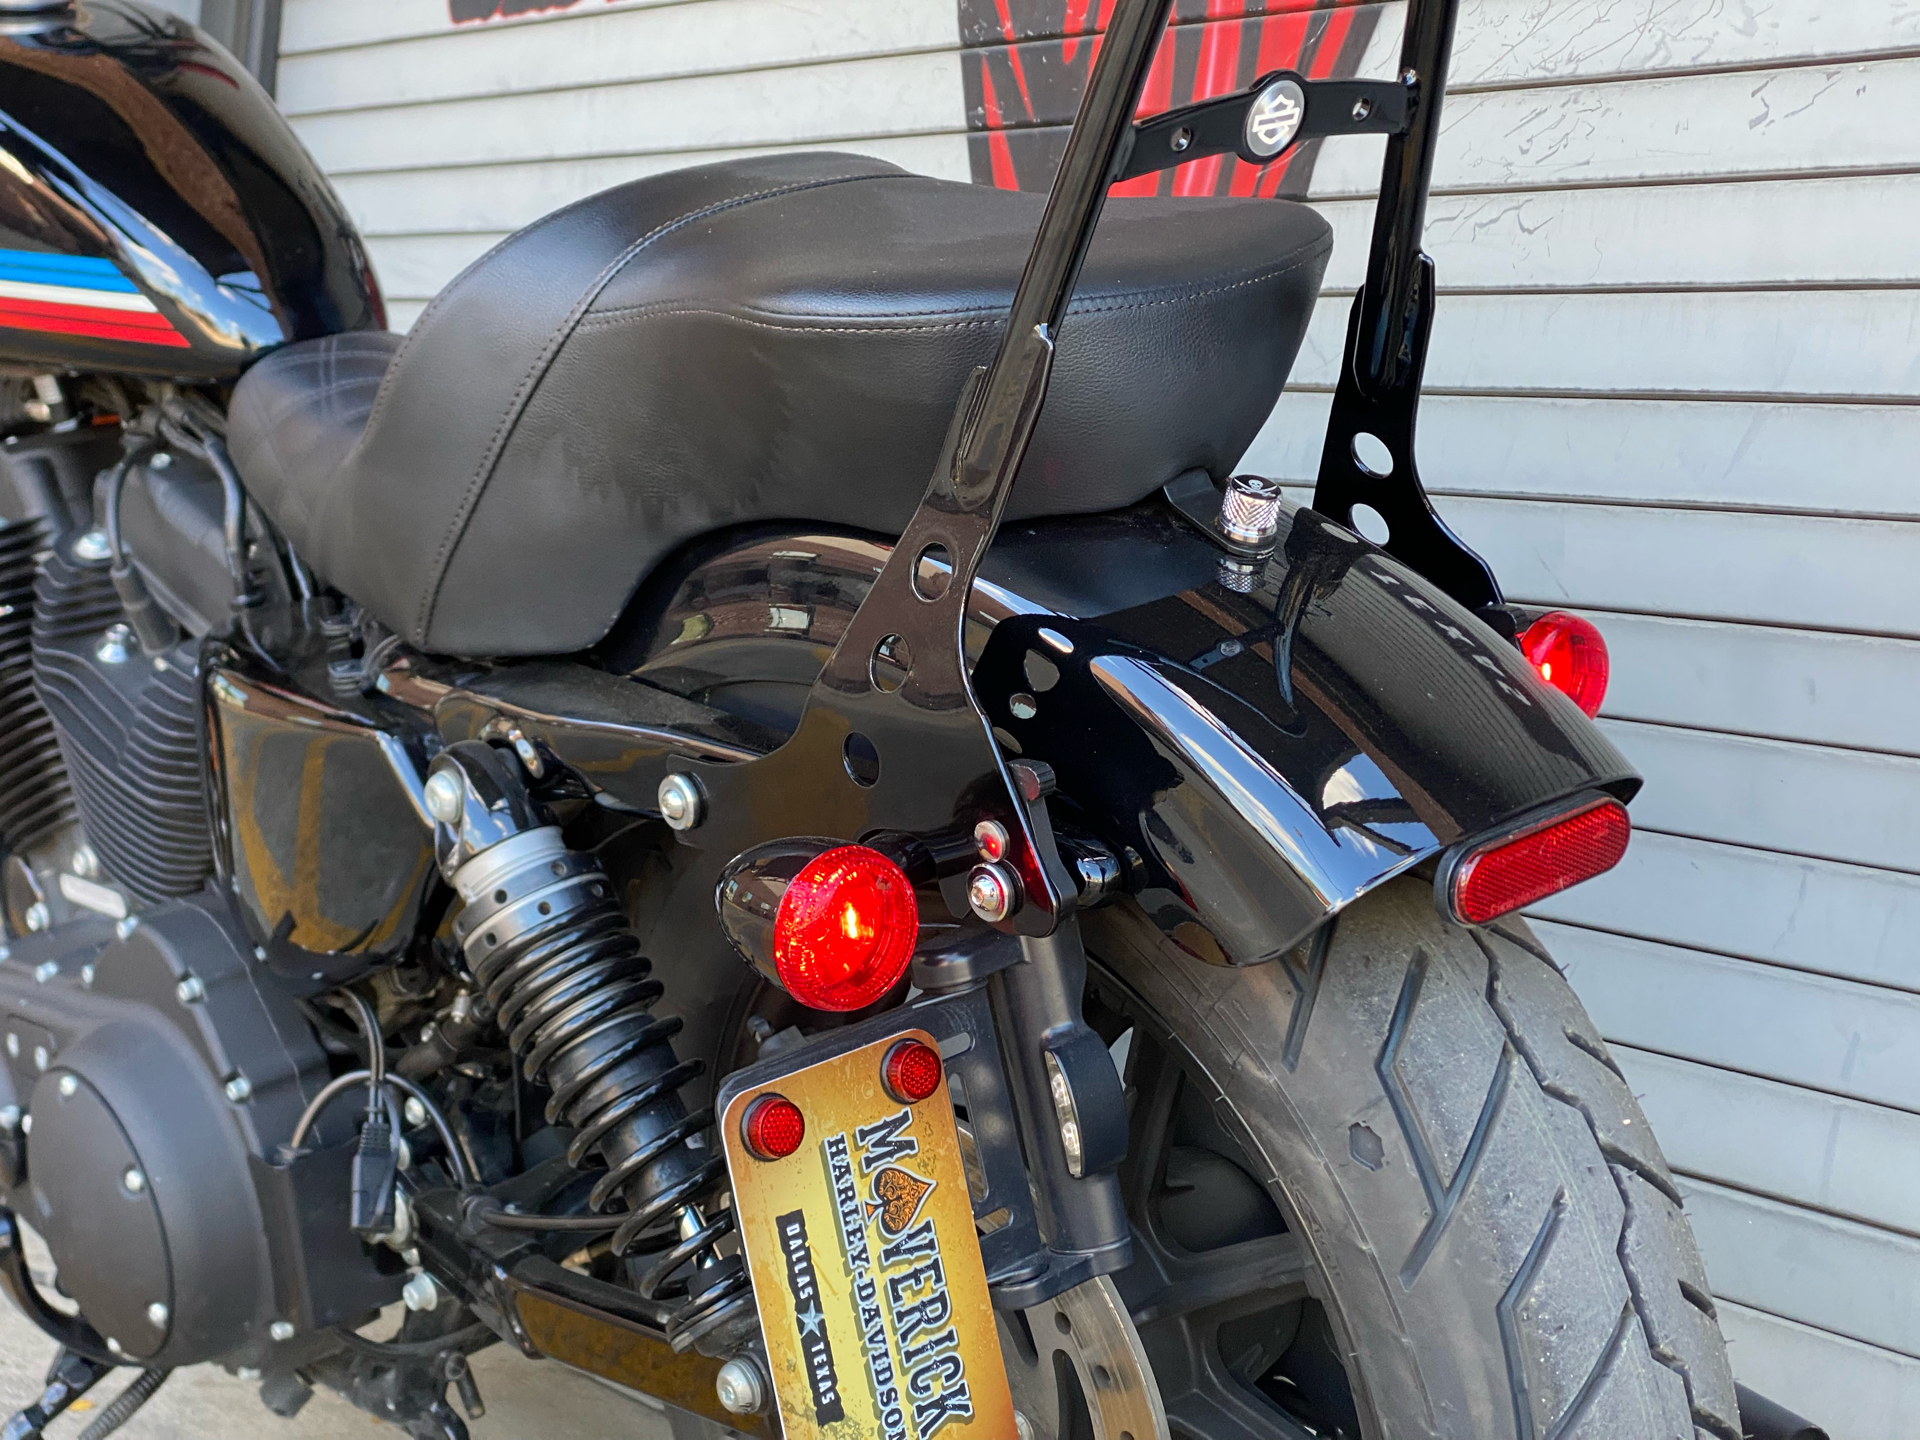 2020 Harley-Davidson Iron 1200™ in Carrollton, Texas - Photo 21